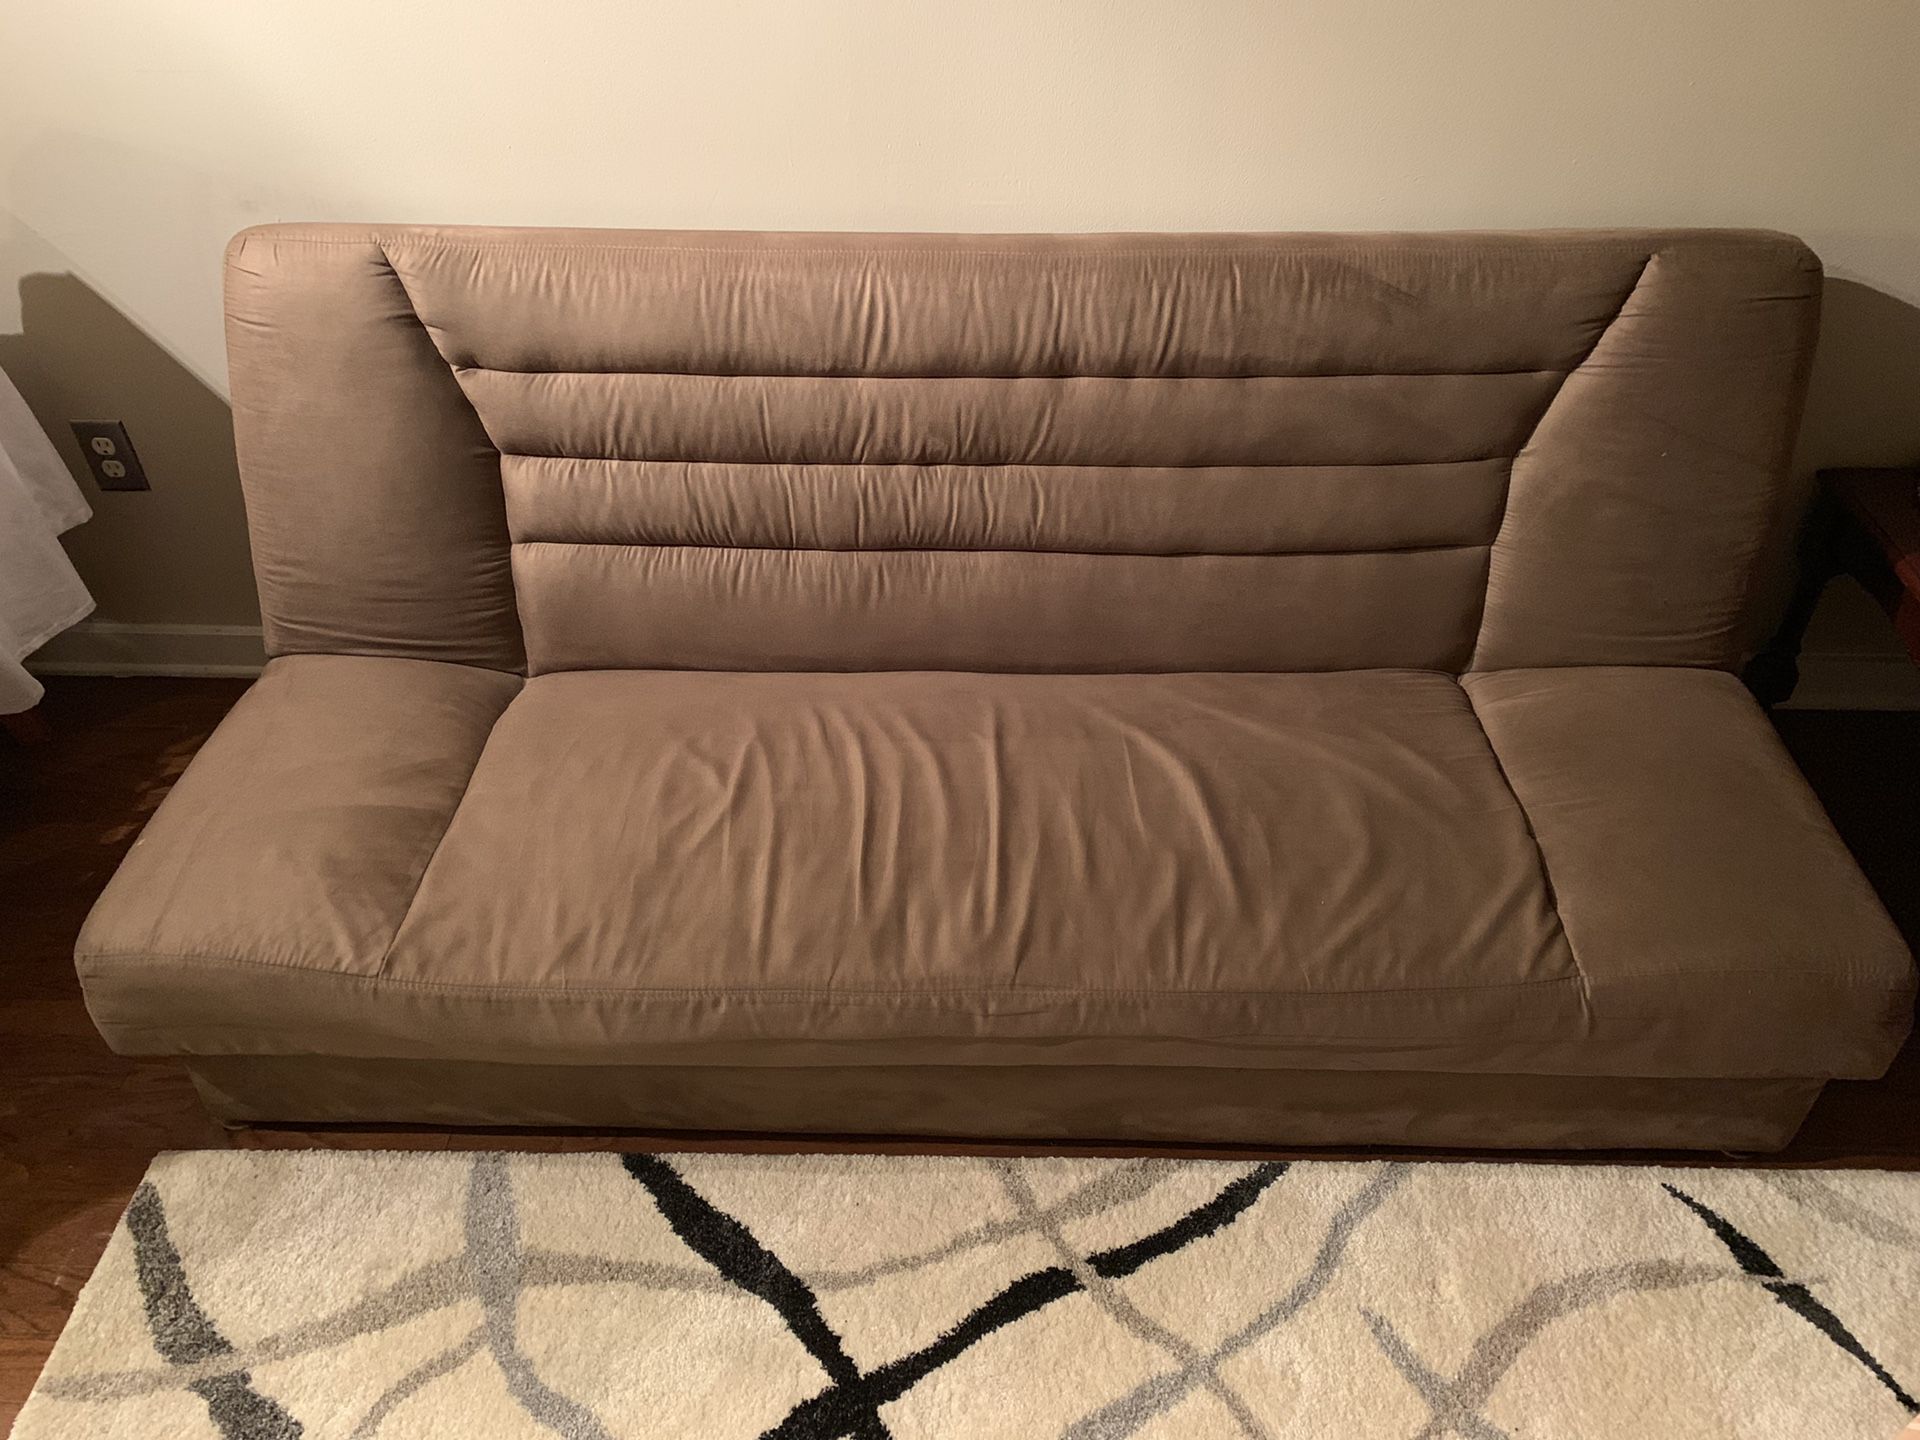 Used futon with storage